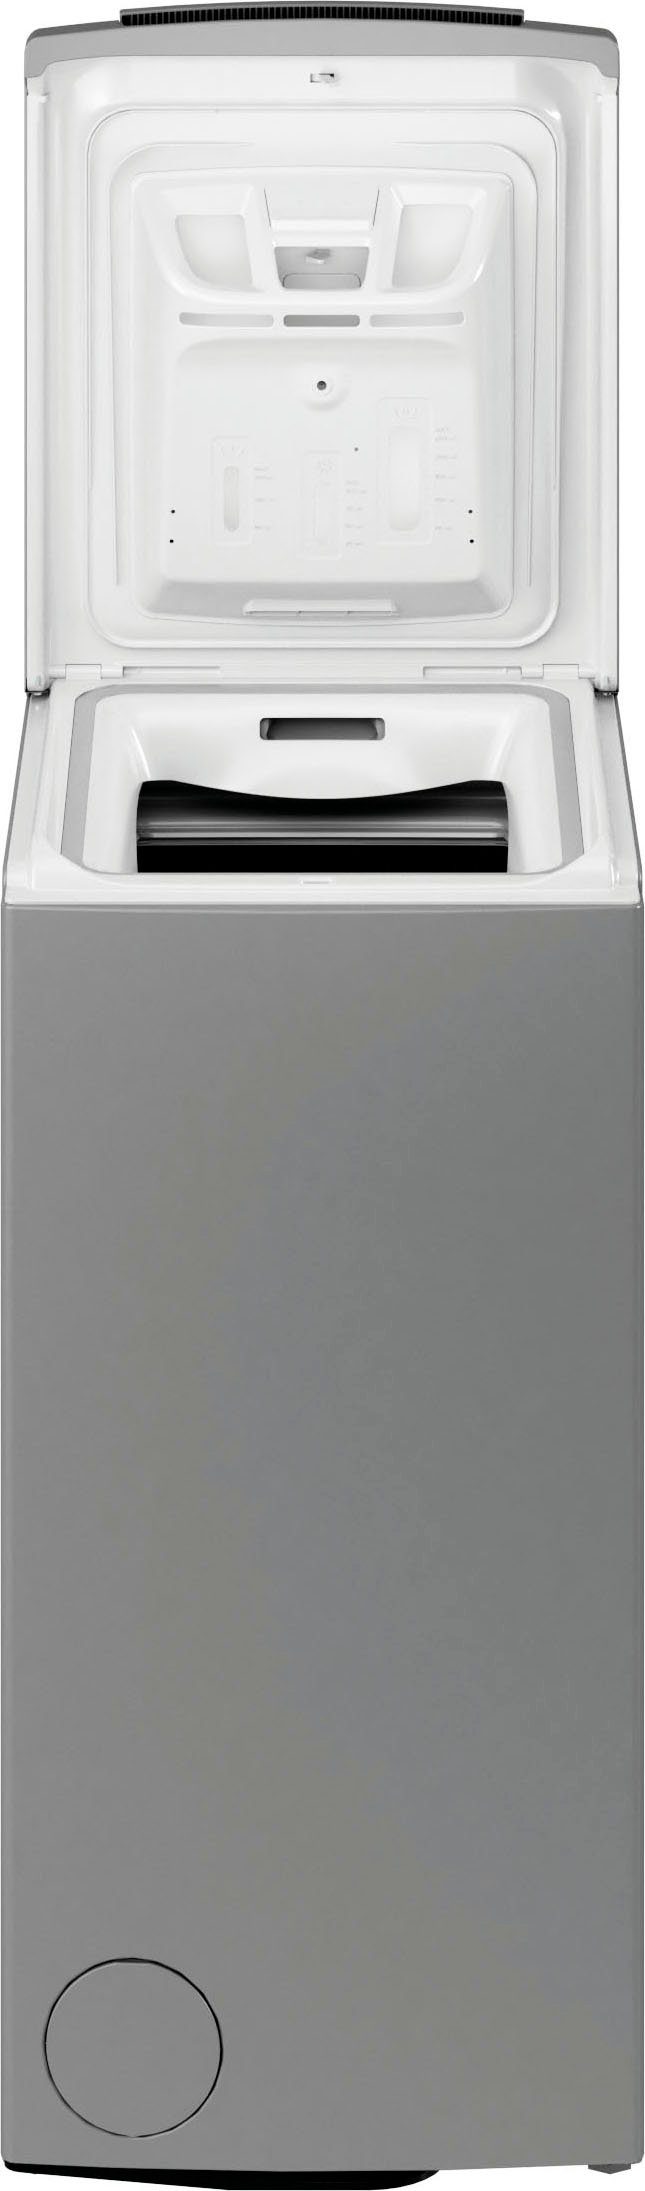 Toplader 1300 U/min WMT Waschmaschine kg, 6513 D4, 6,5 BAUKNECHT